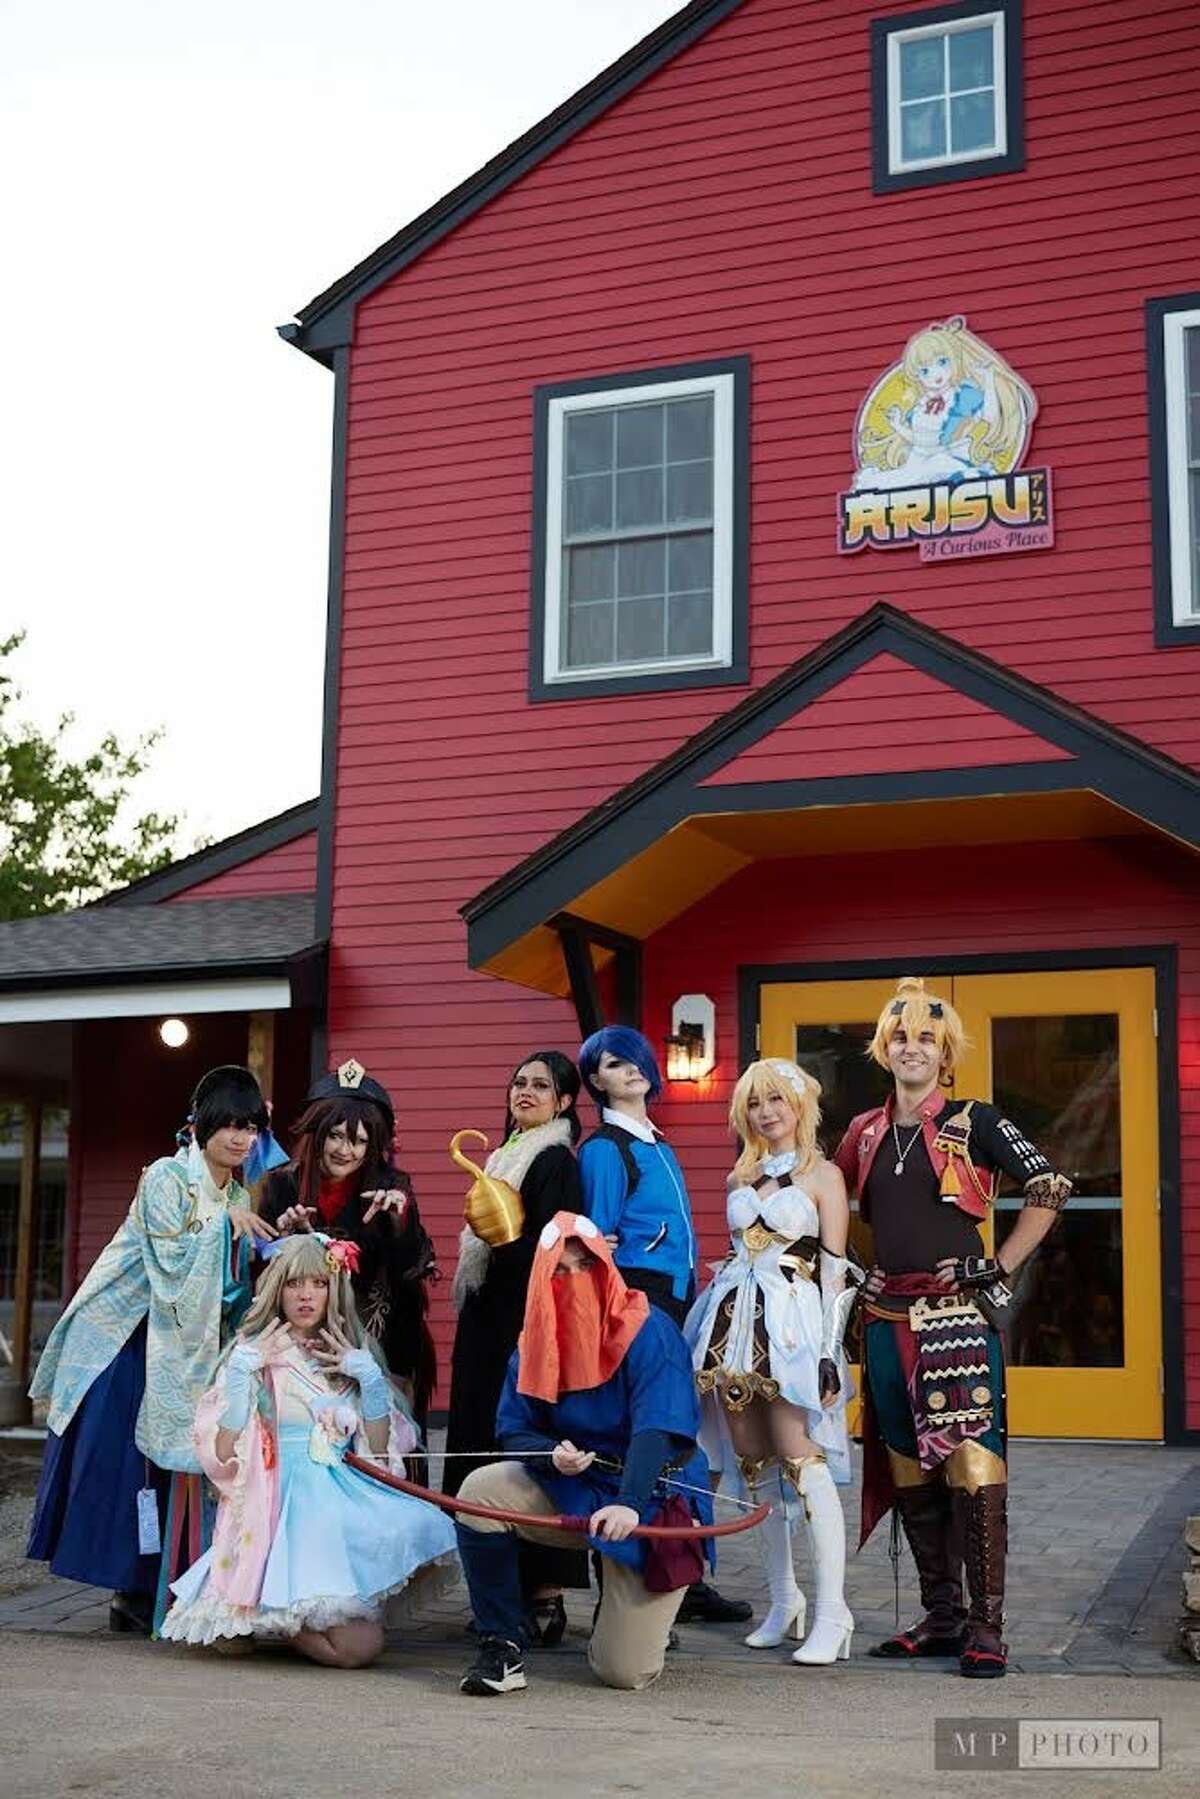 Arisu Anime, large-scale anime and manga store, opens in Mystic